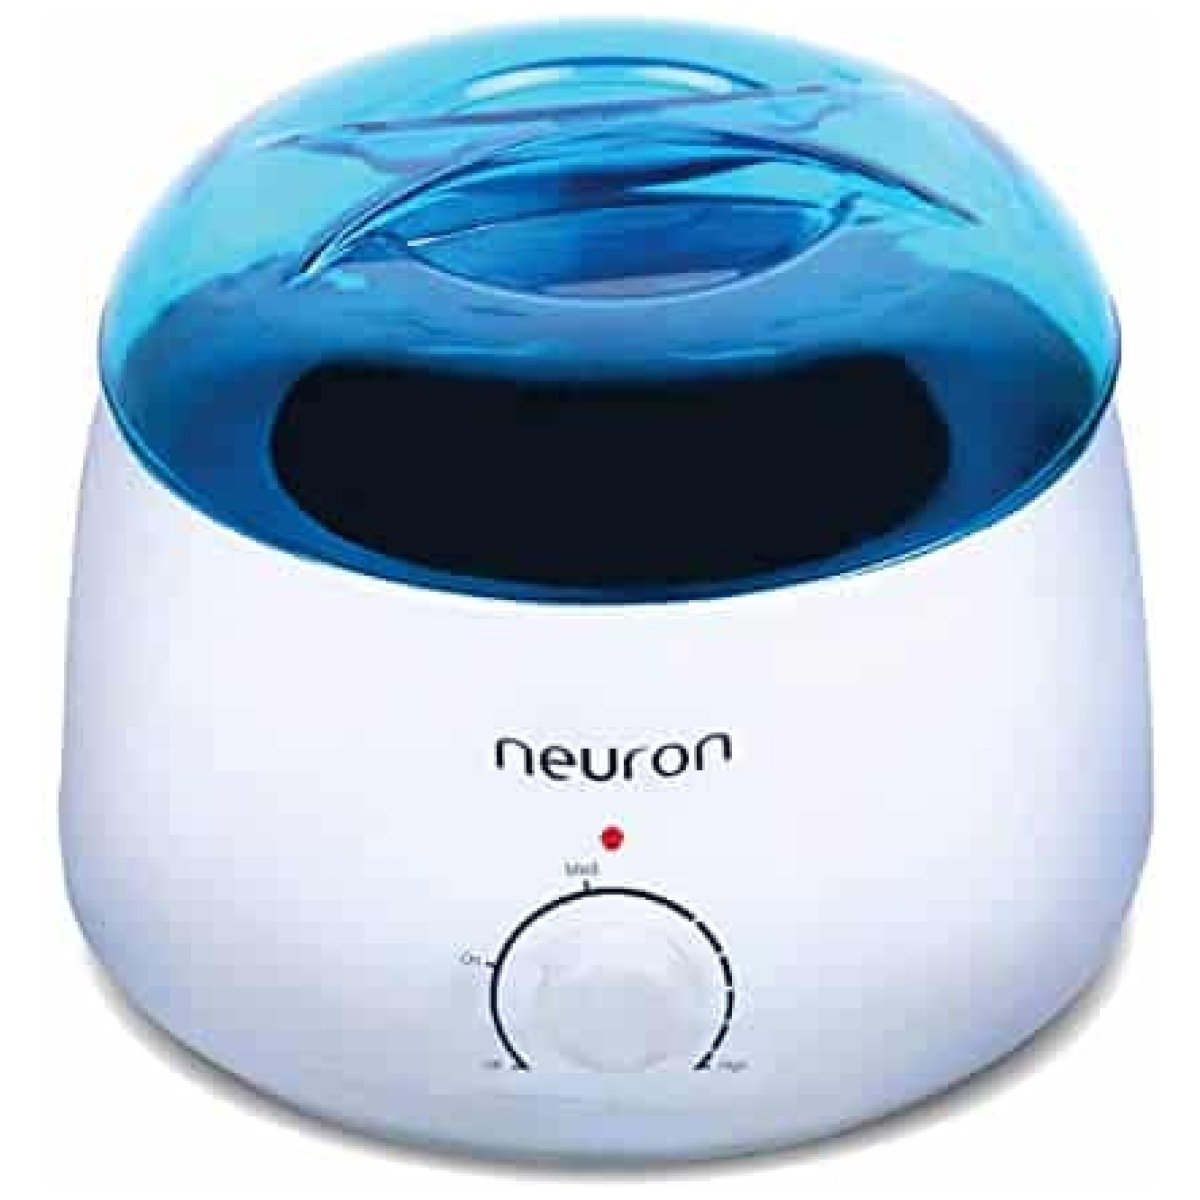 Neuron Mercury Wax Heater